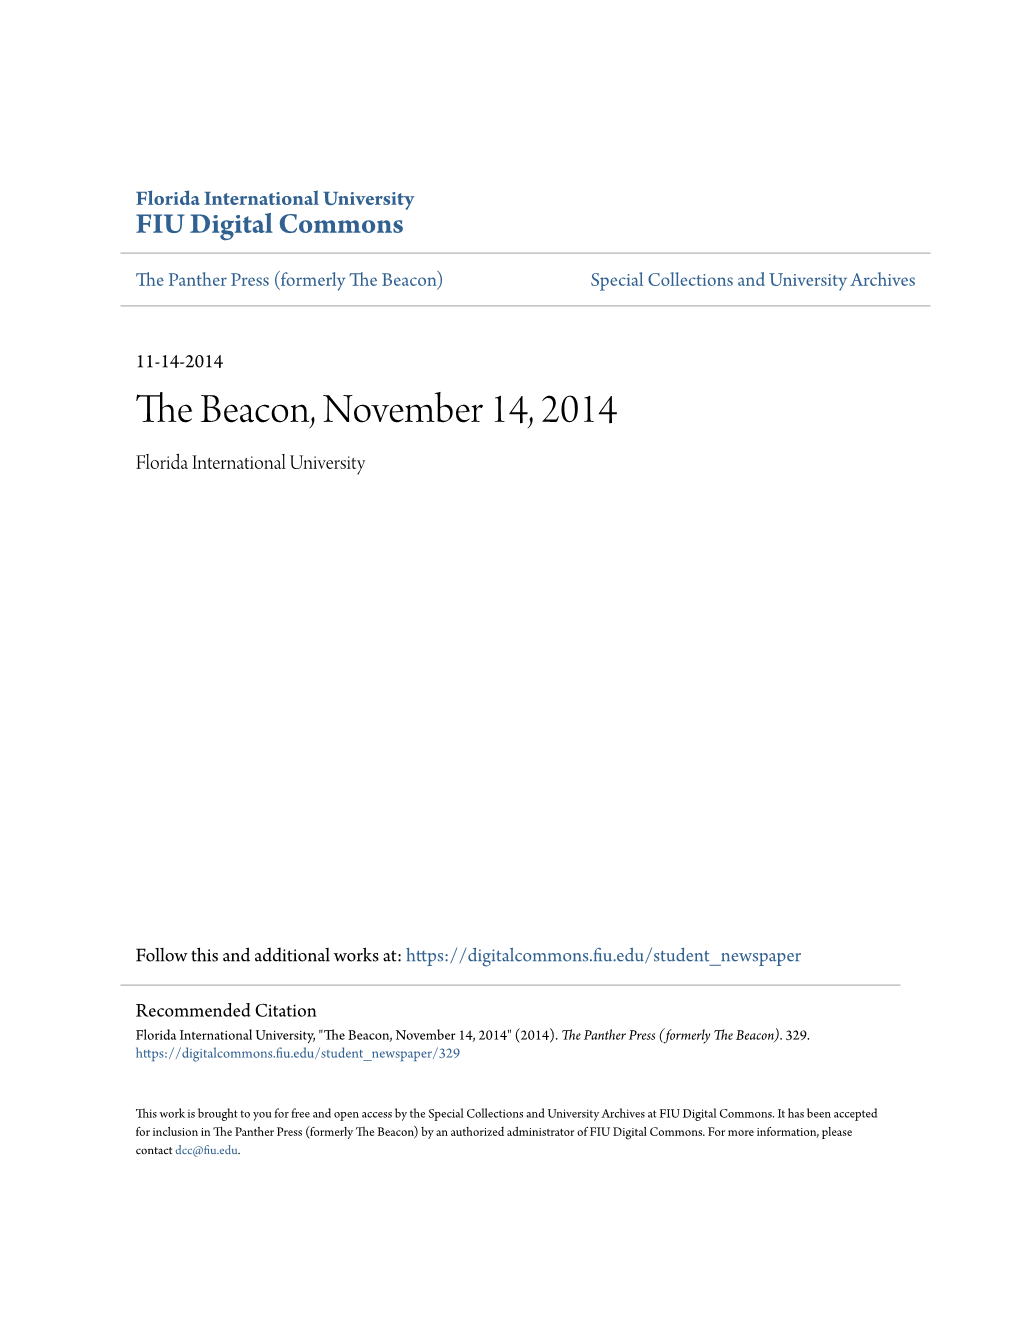 The Beacon, November 14, 2014 Florida International University